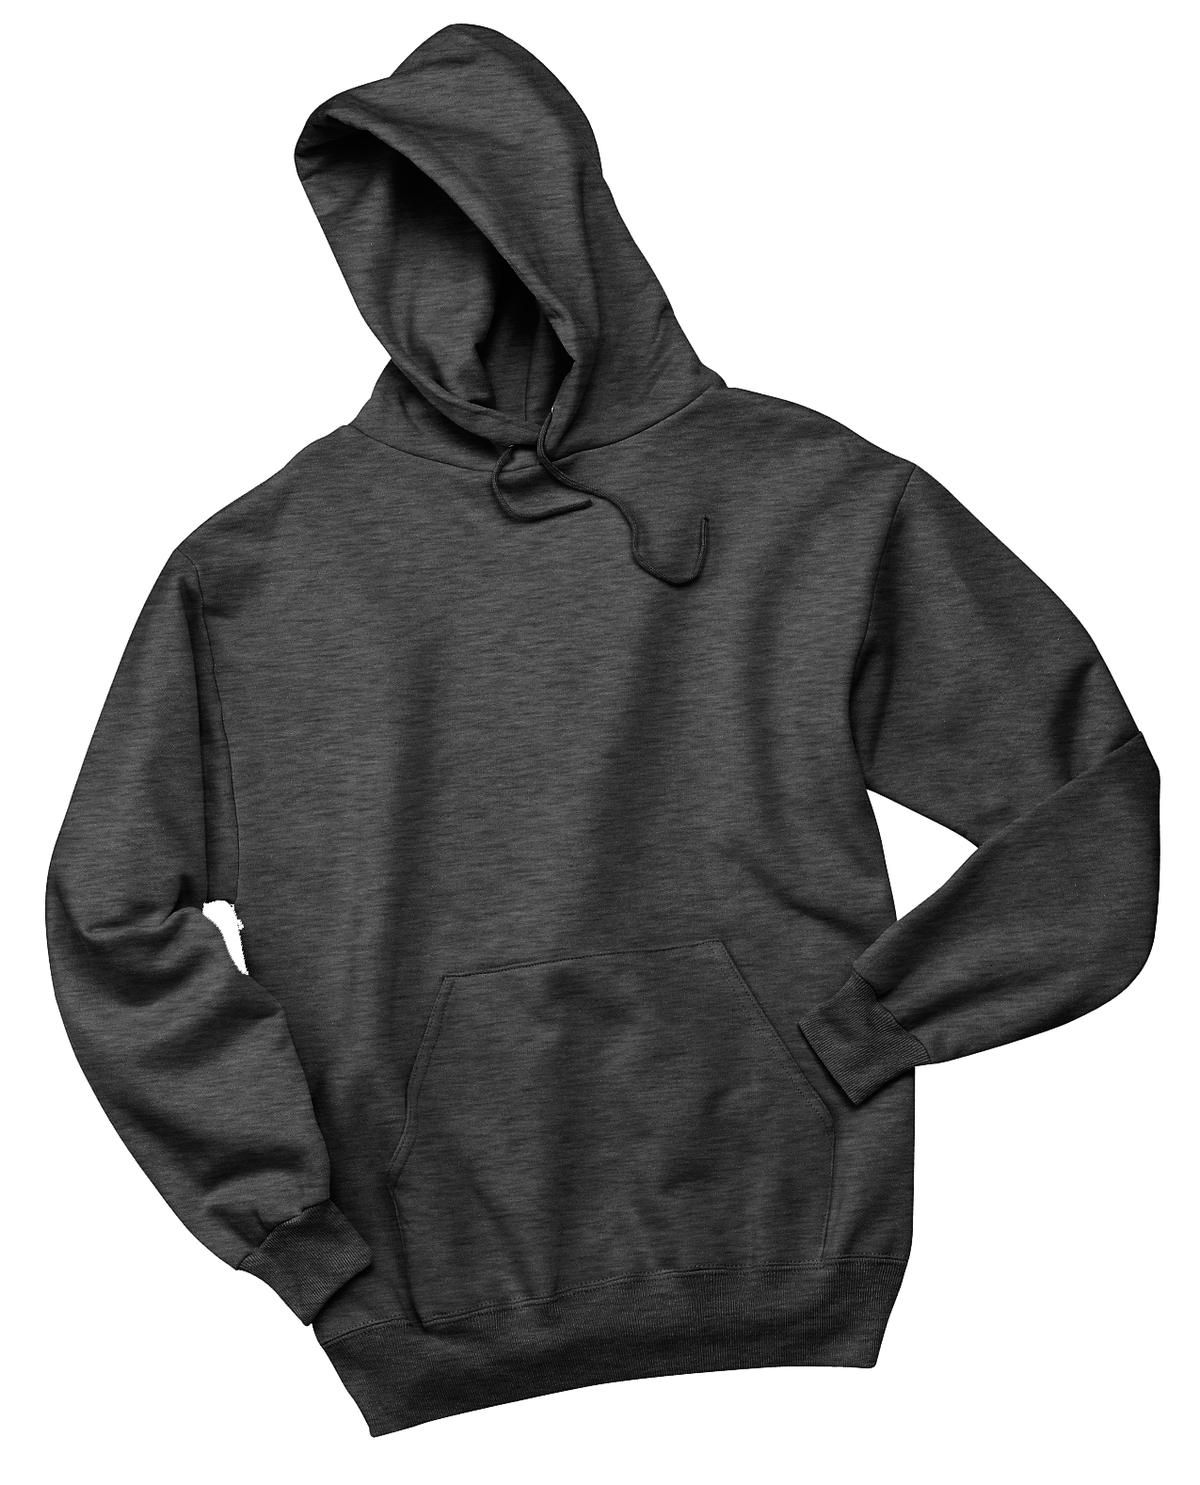 Jerzees - NuBlend Pullover Hooded Sweatshirt. 996M - Black Heather